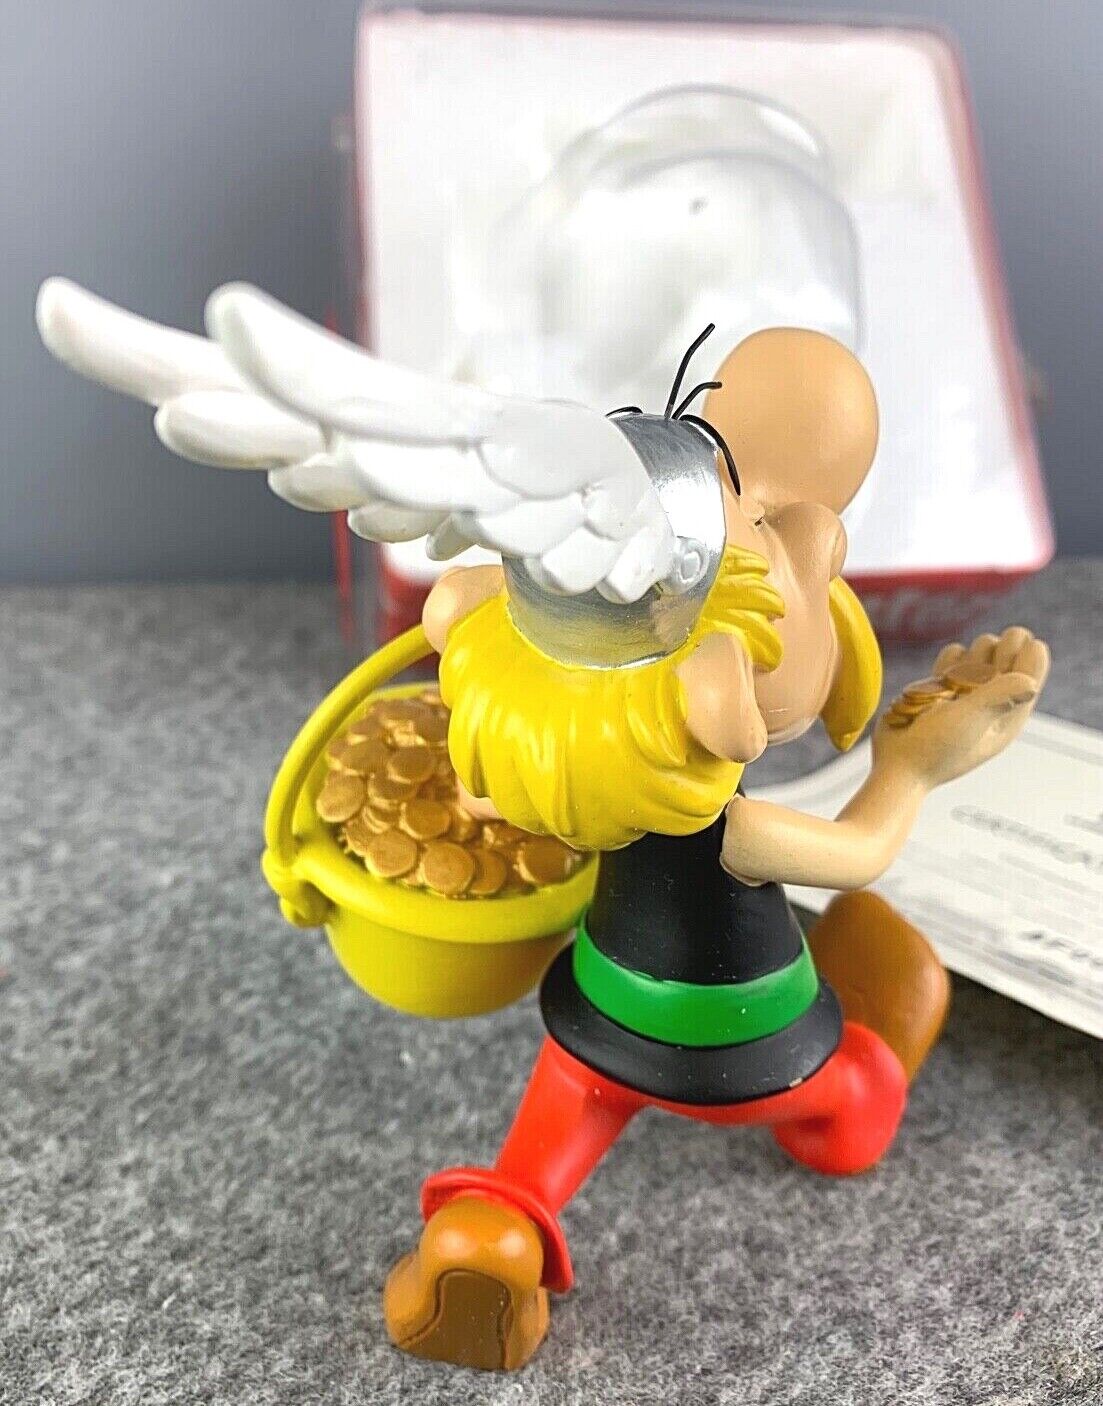 Hachette Ed. Rene Figurine #1 Asterix & Cauldron Ltd 12cm Grand Galerie Figure